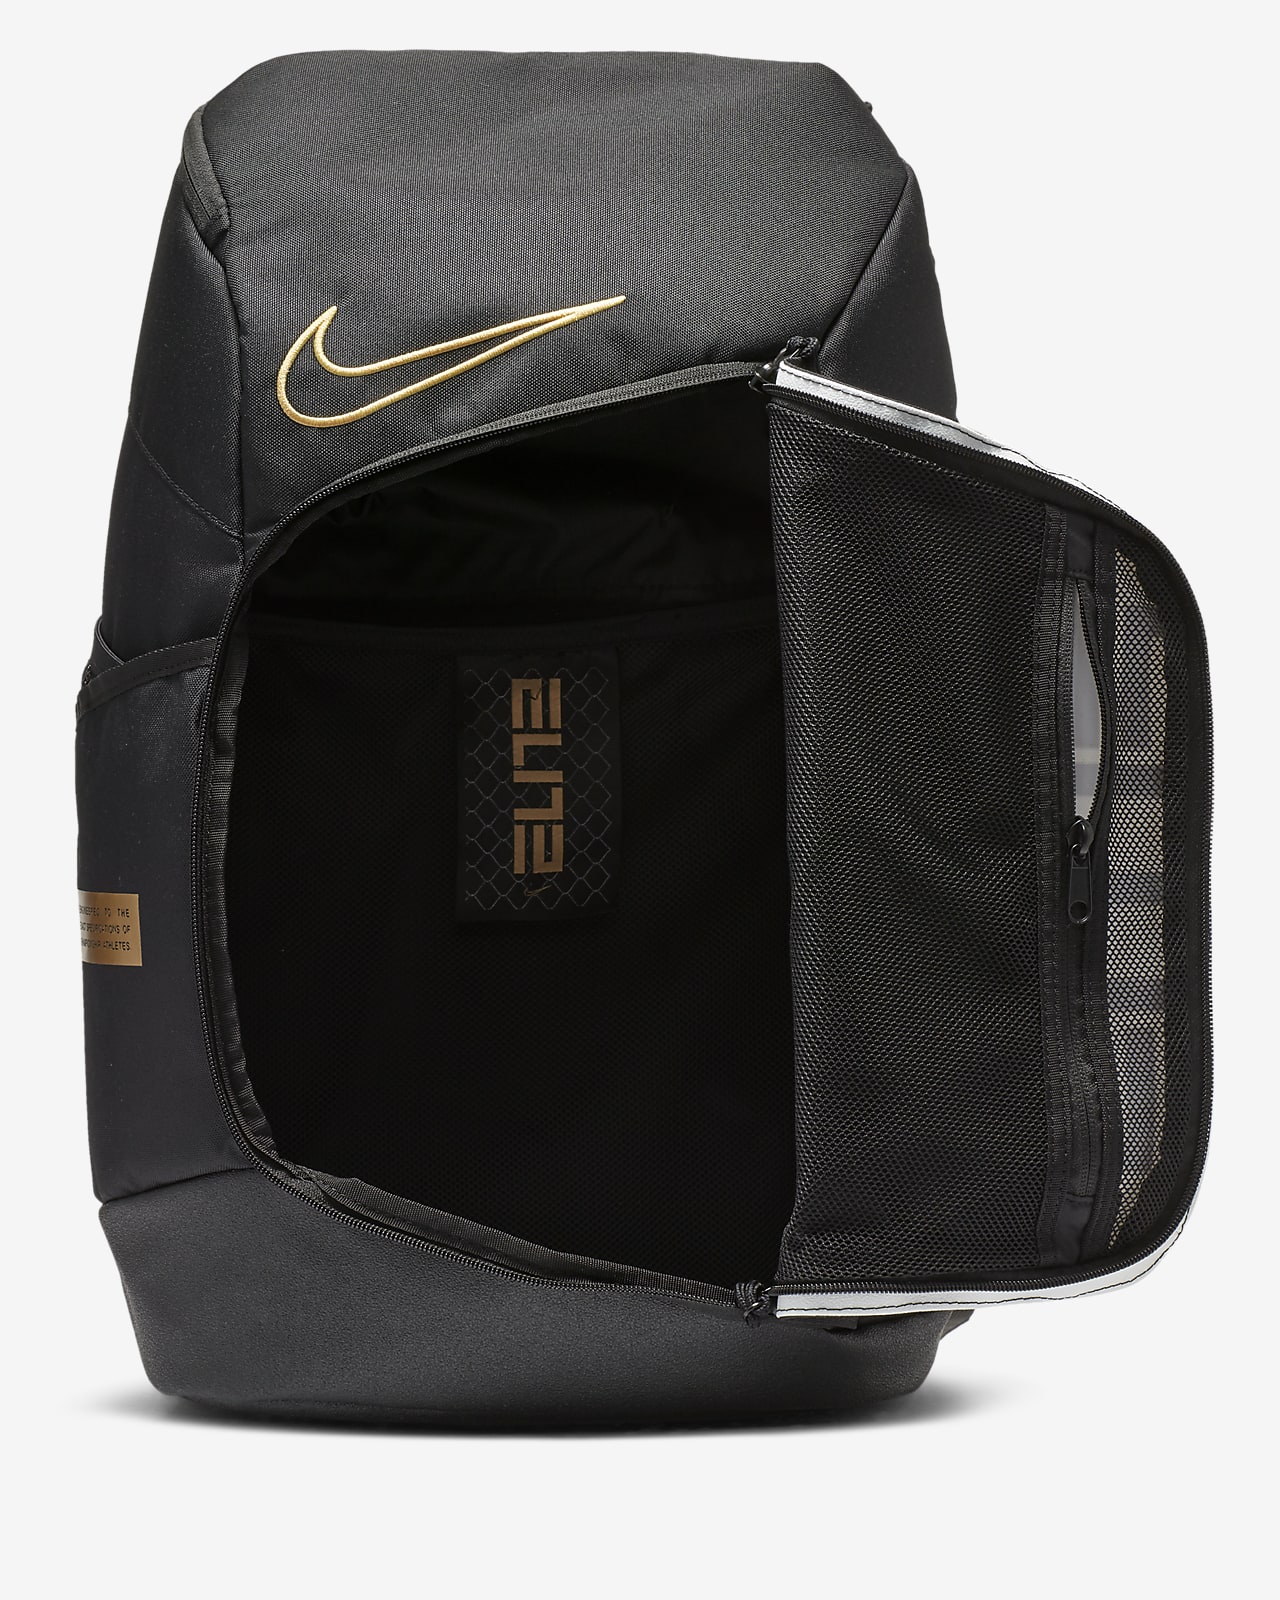 Nike Team USA Elite Pro Backpack - recoveryparade-japan.com